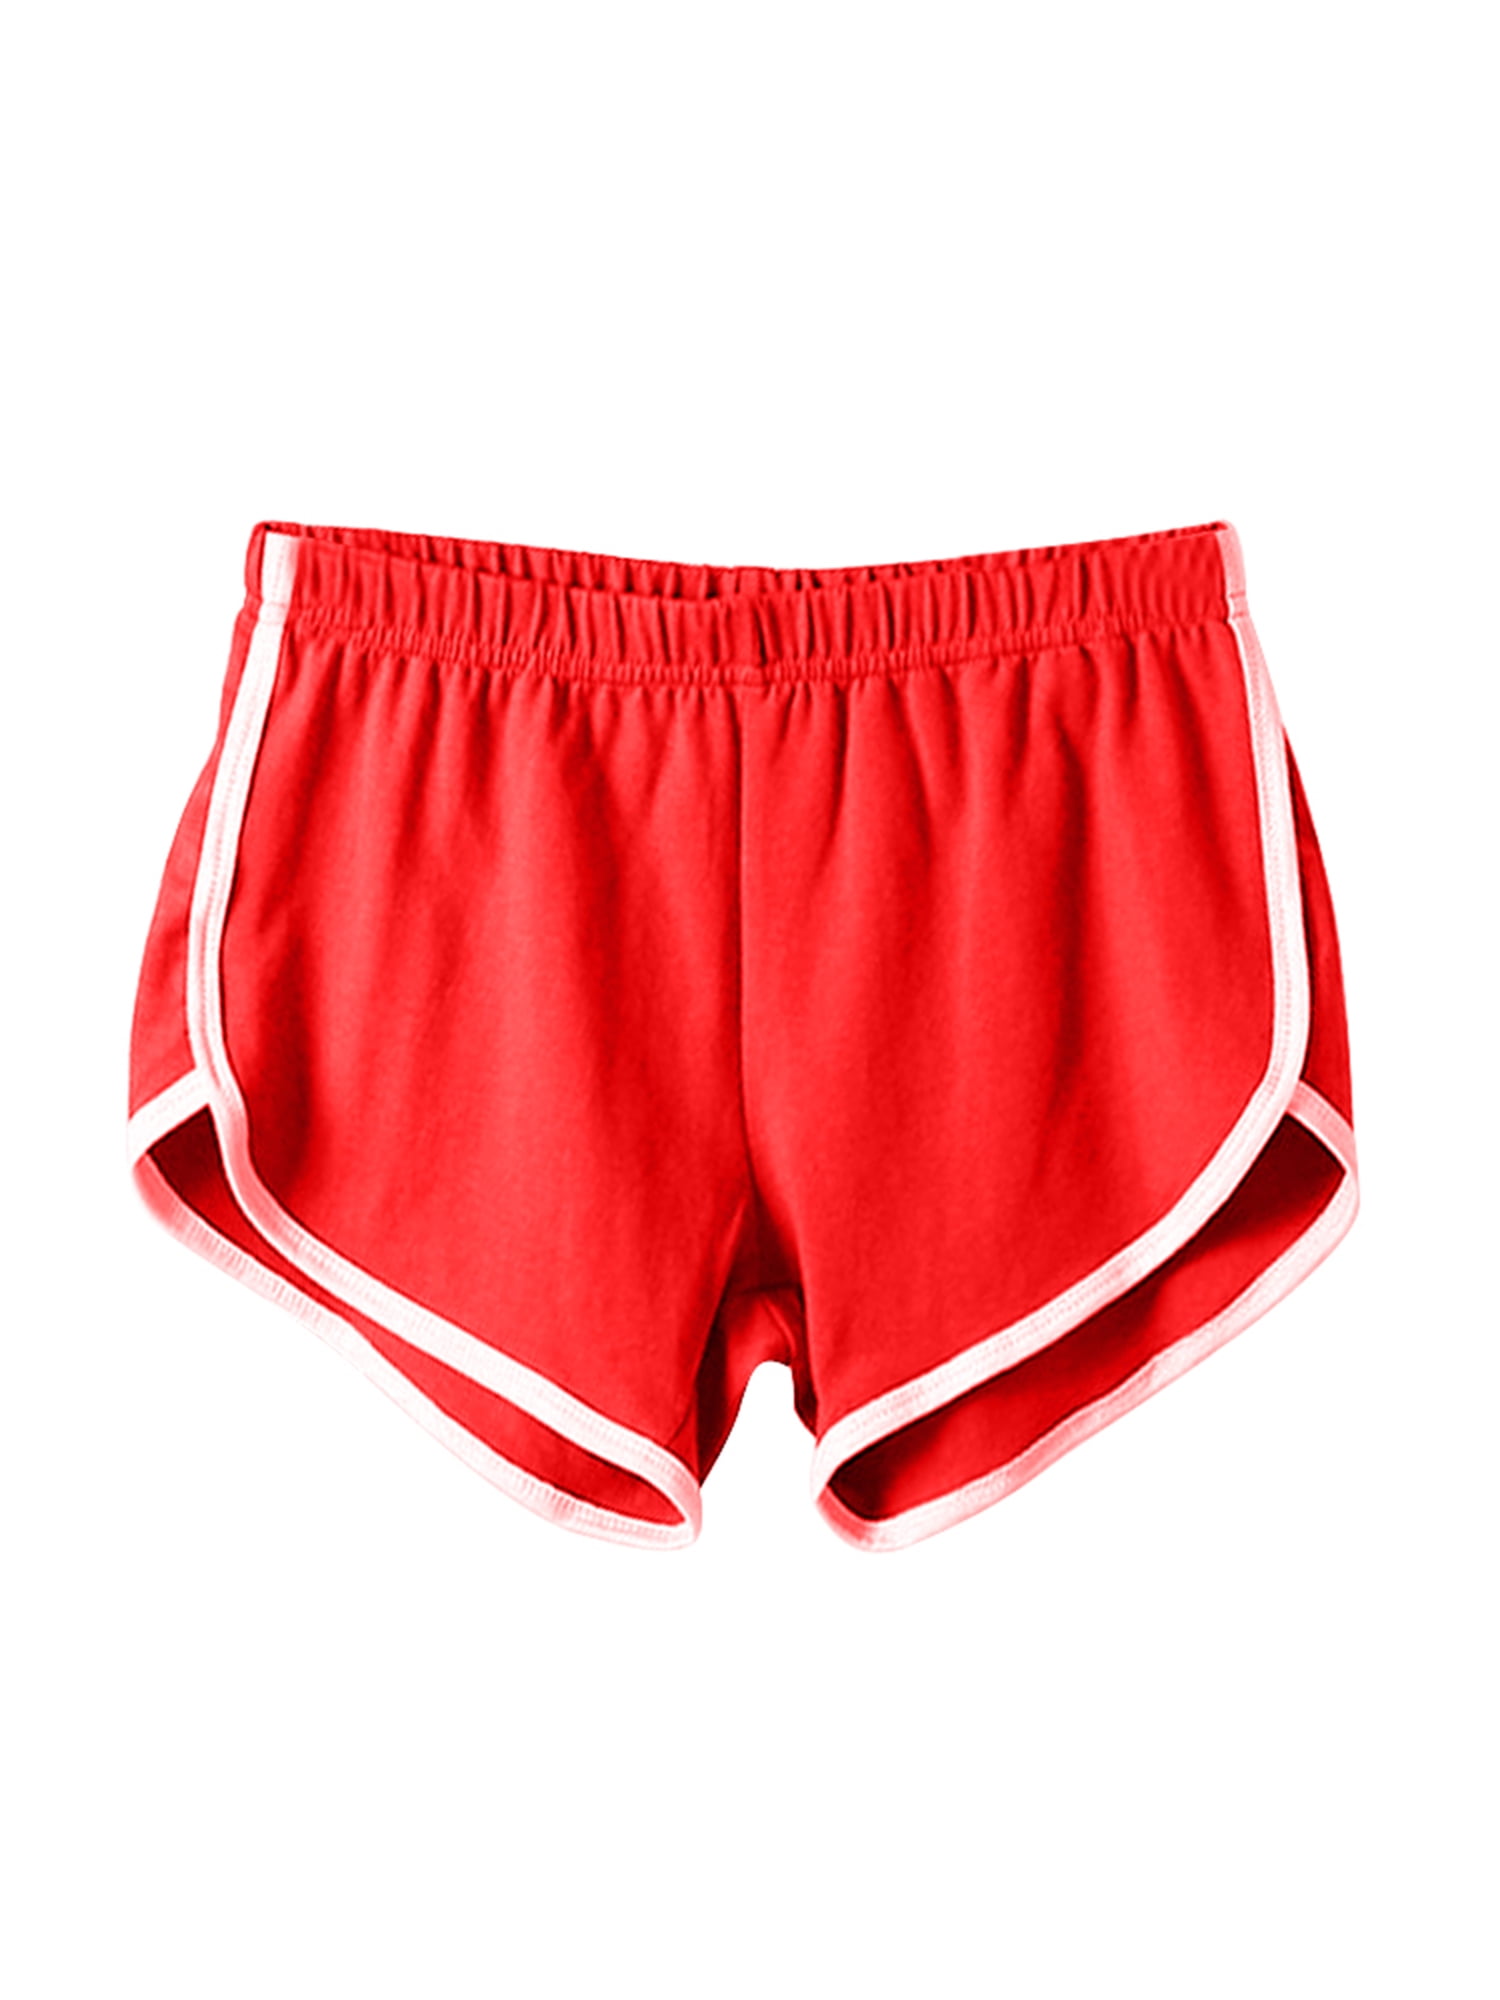 Womens Fleck Gym Summer Holiday Hot Pants Ladies Workout Runner Shorts 